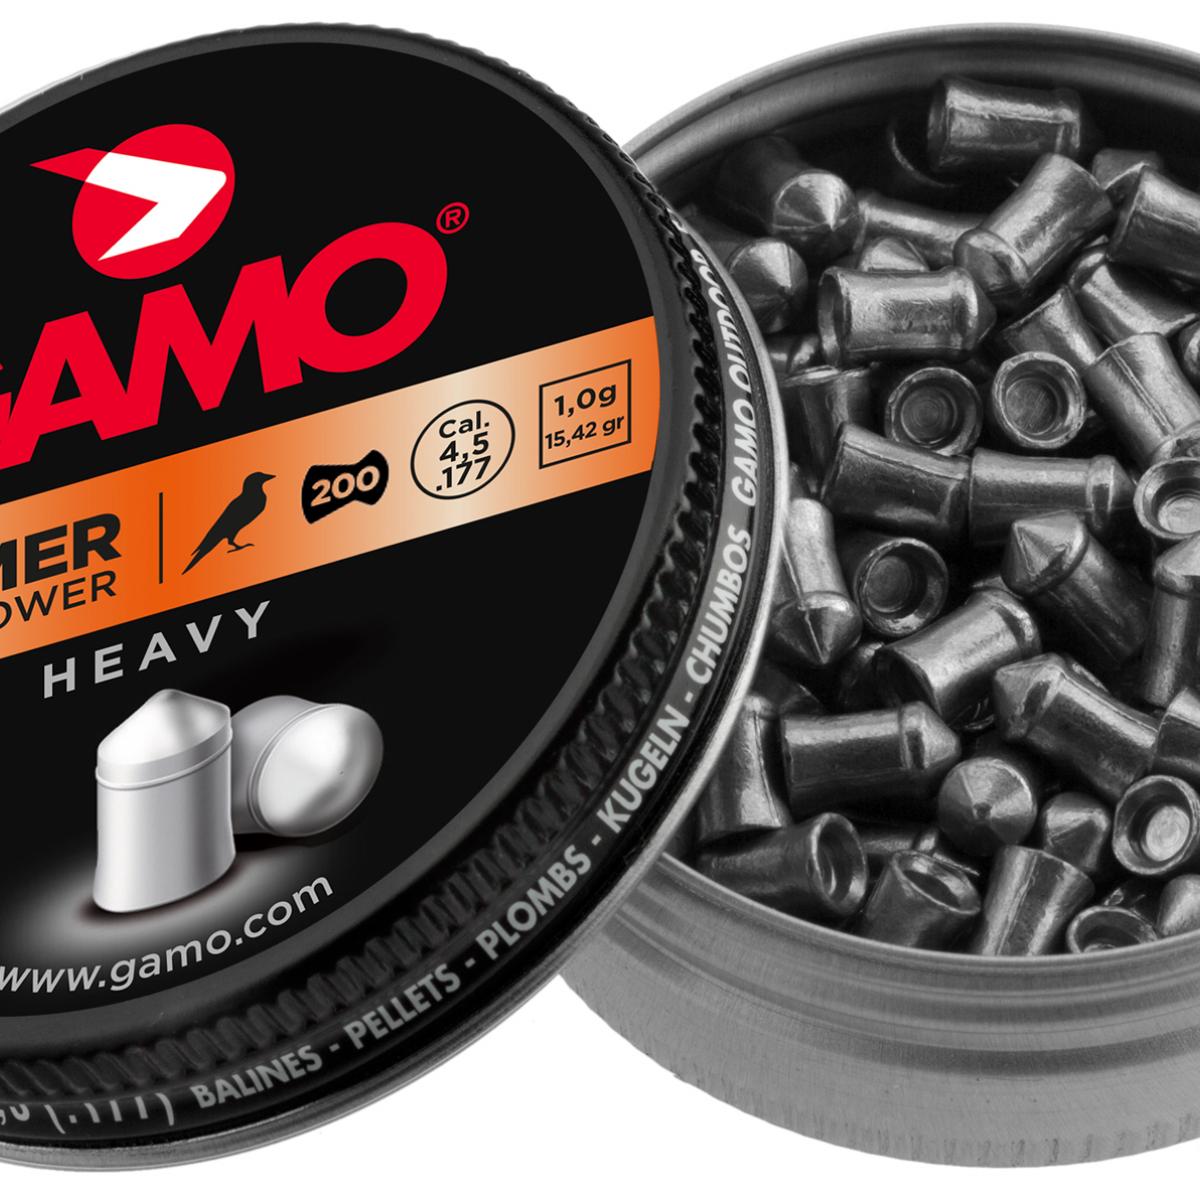 Plombs lourds GAMO G-Hammer à tête pointue calibre 4.5 mm